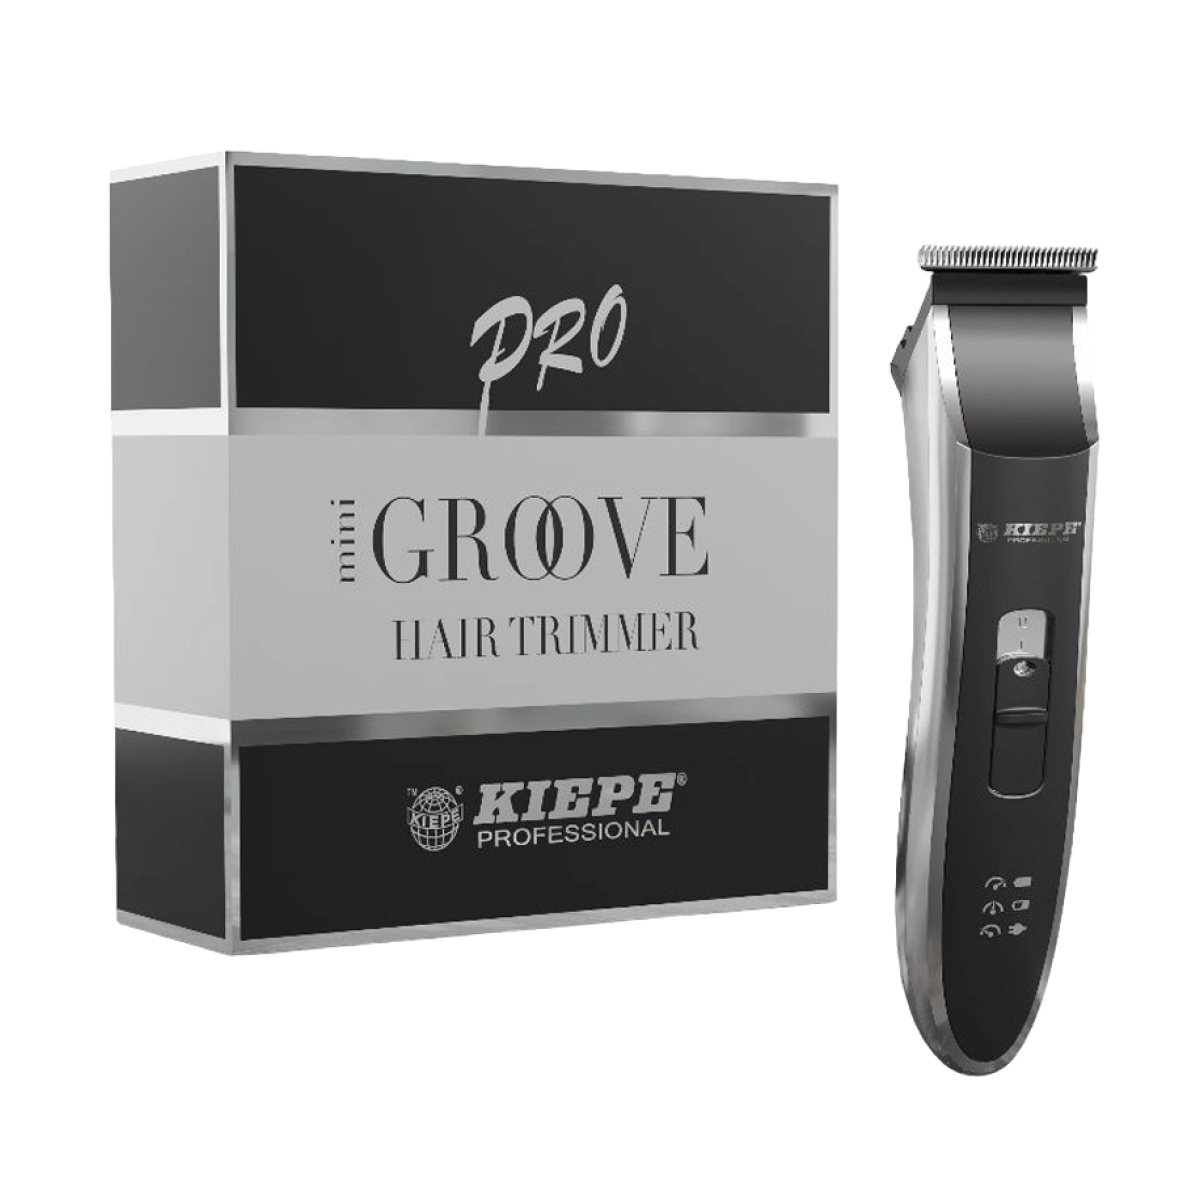 Kiepe Pro Mini Groove Hair Trimmer 5901